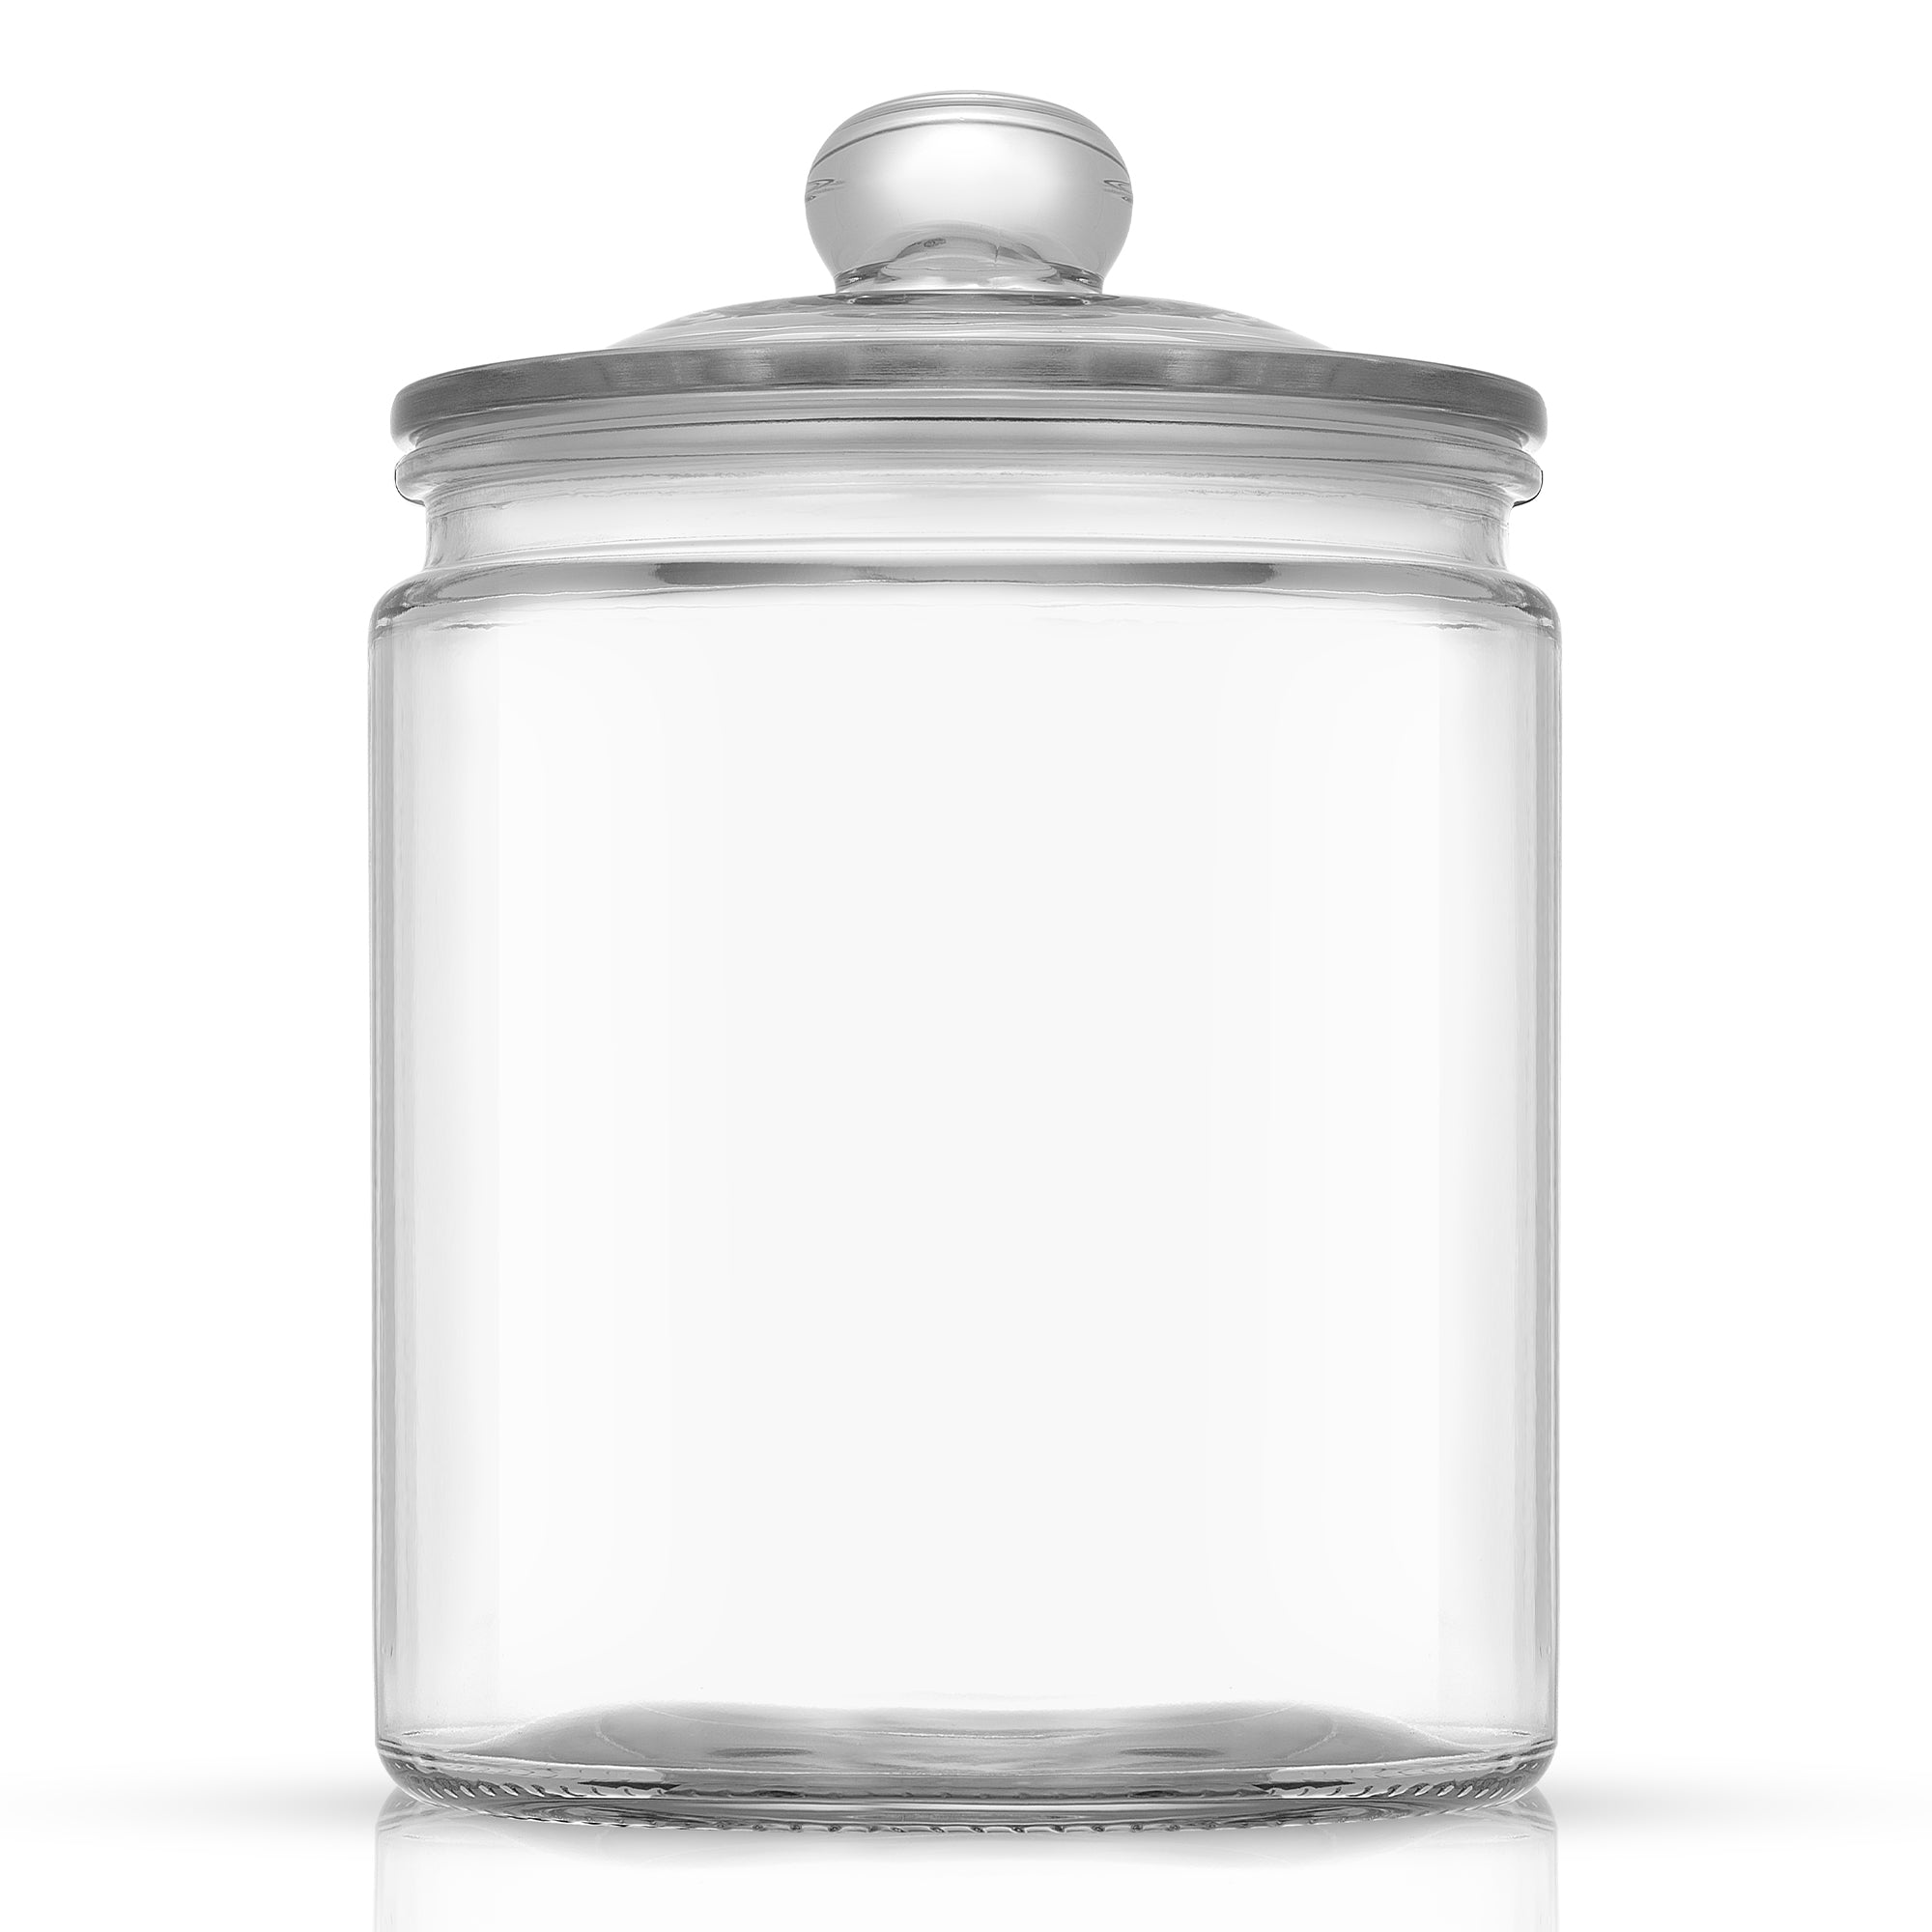 JoyFul Round Glass Cookie Jar with Airtight Lids